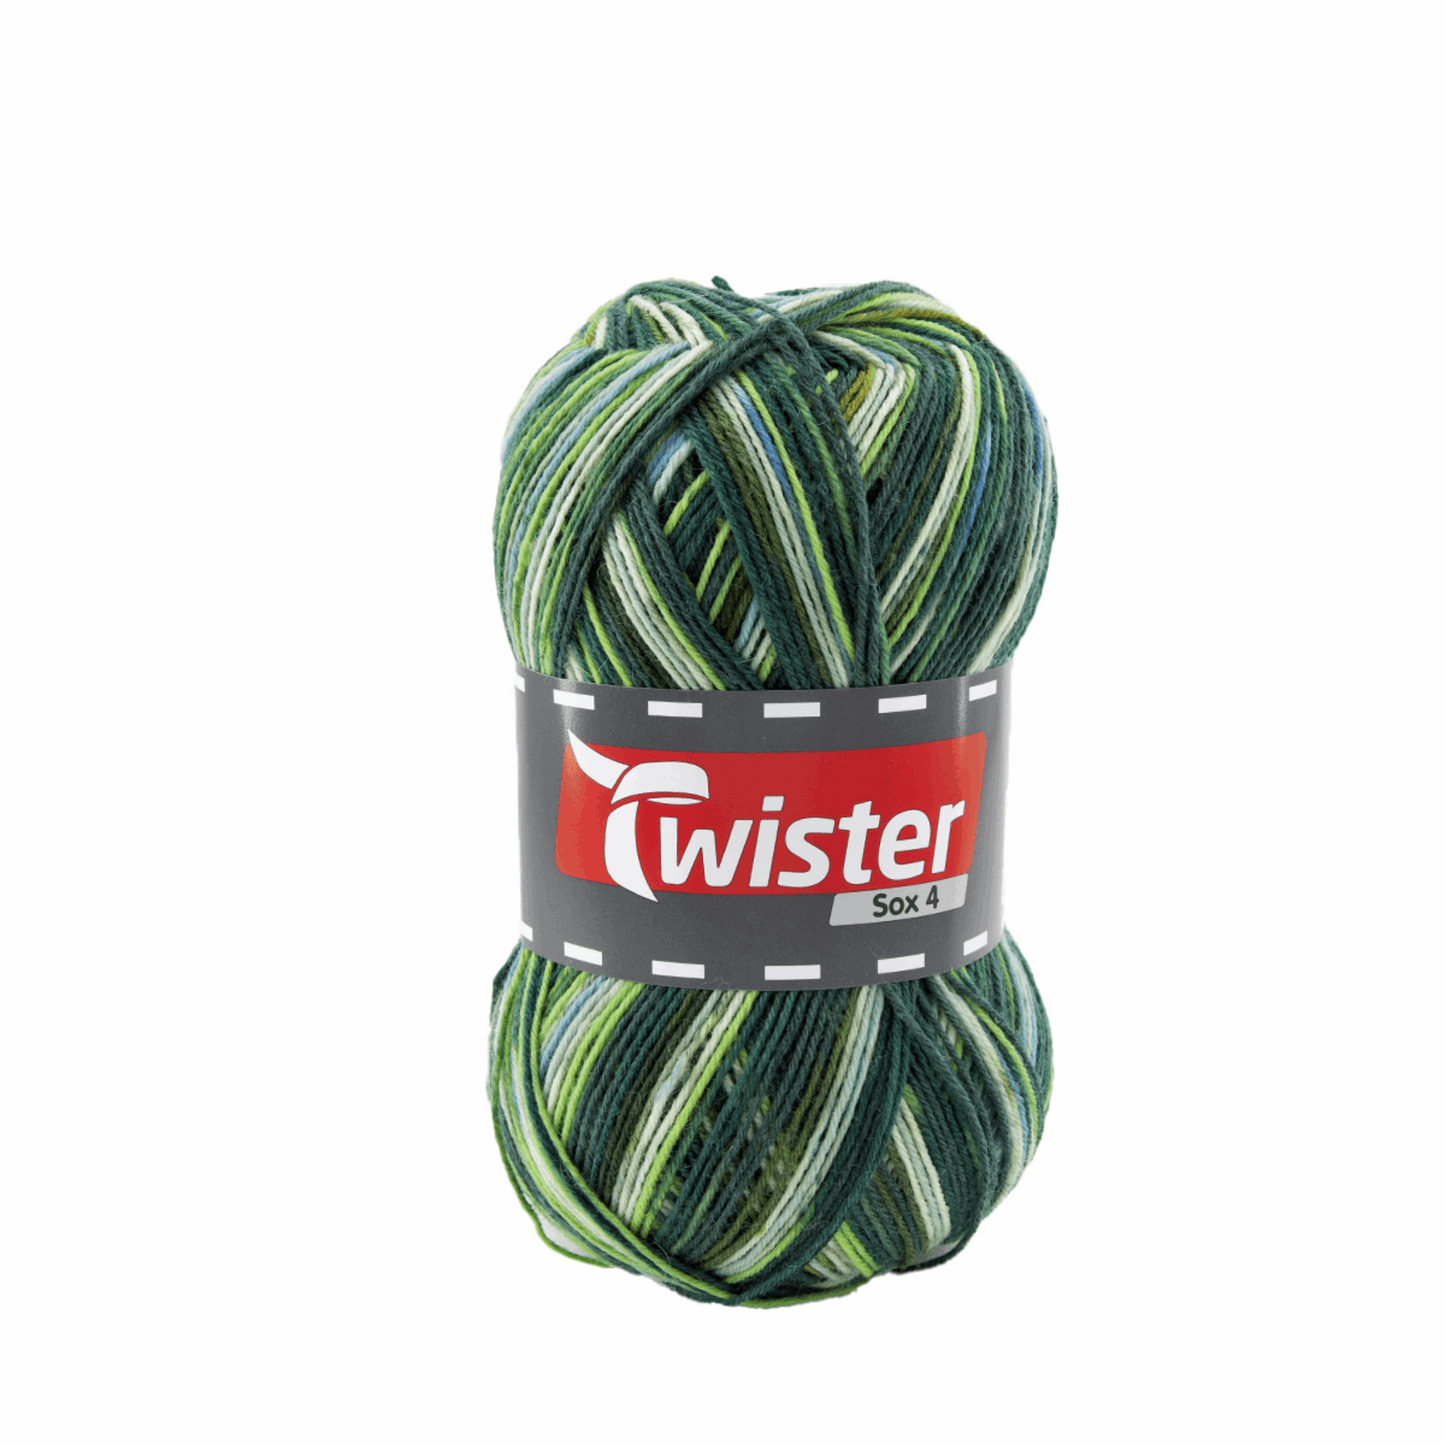 Twister Sox4 Color superwash, green olive gray, 98306, color 836